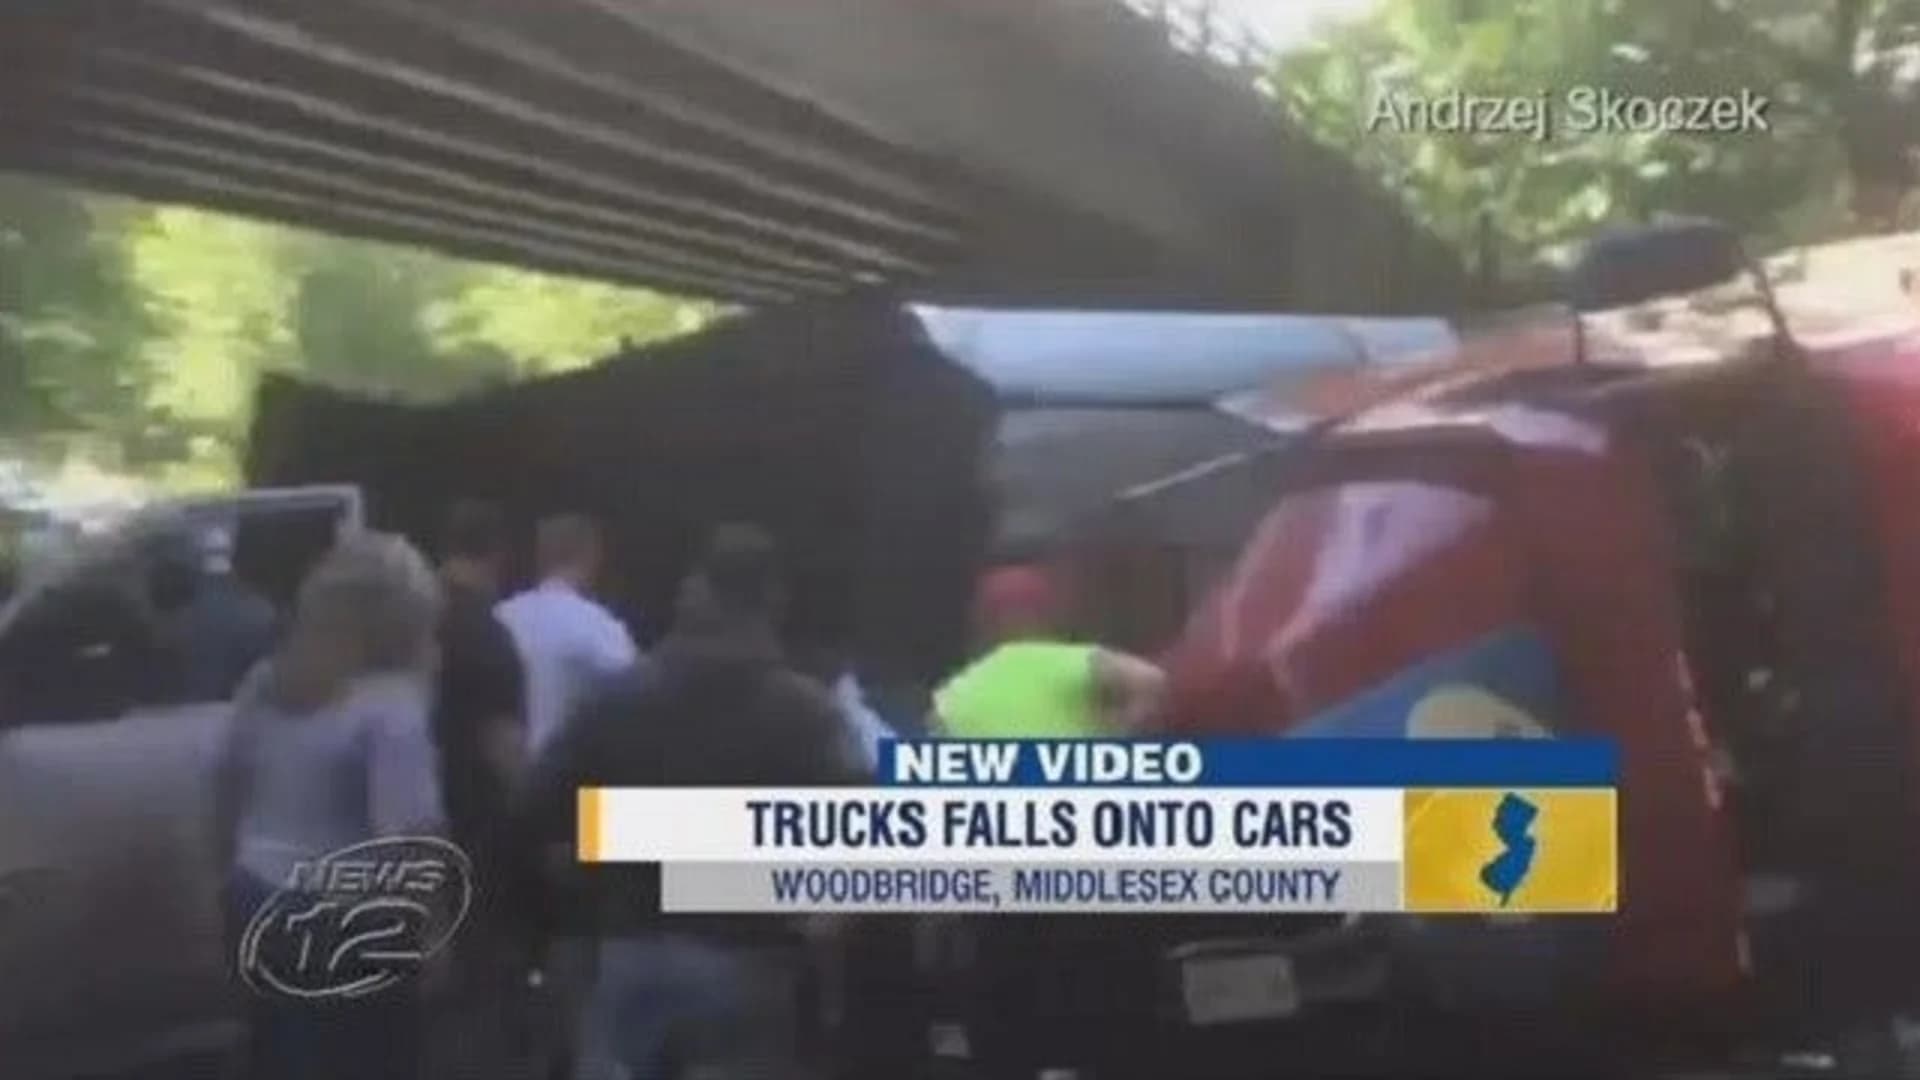 Garbage truck rolls off ramp onto cars, killing man